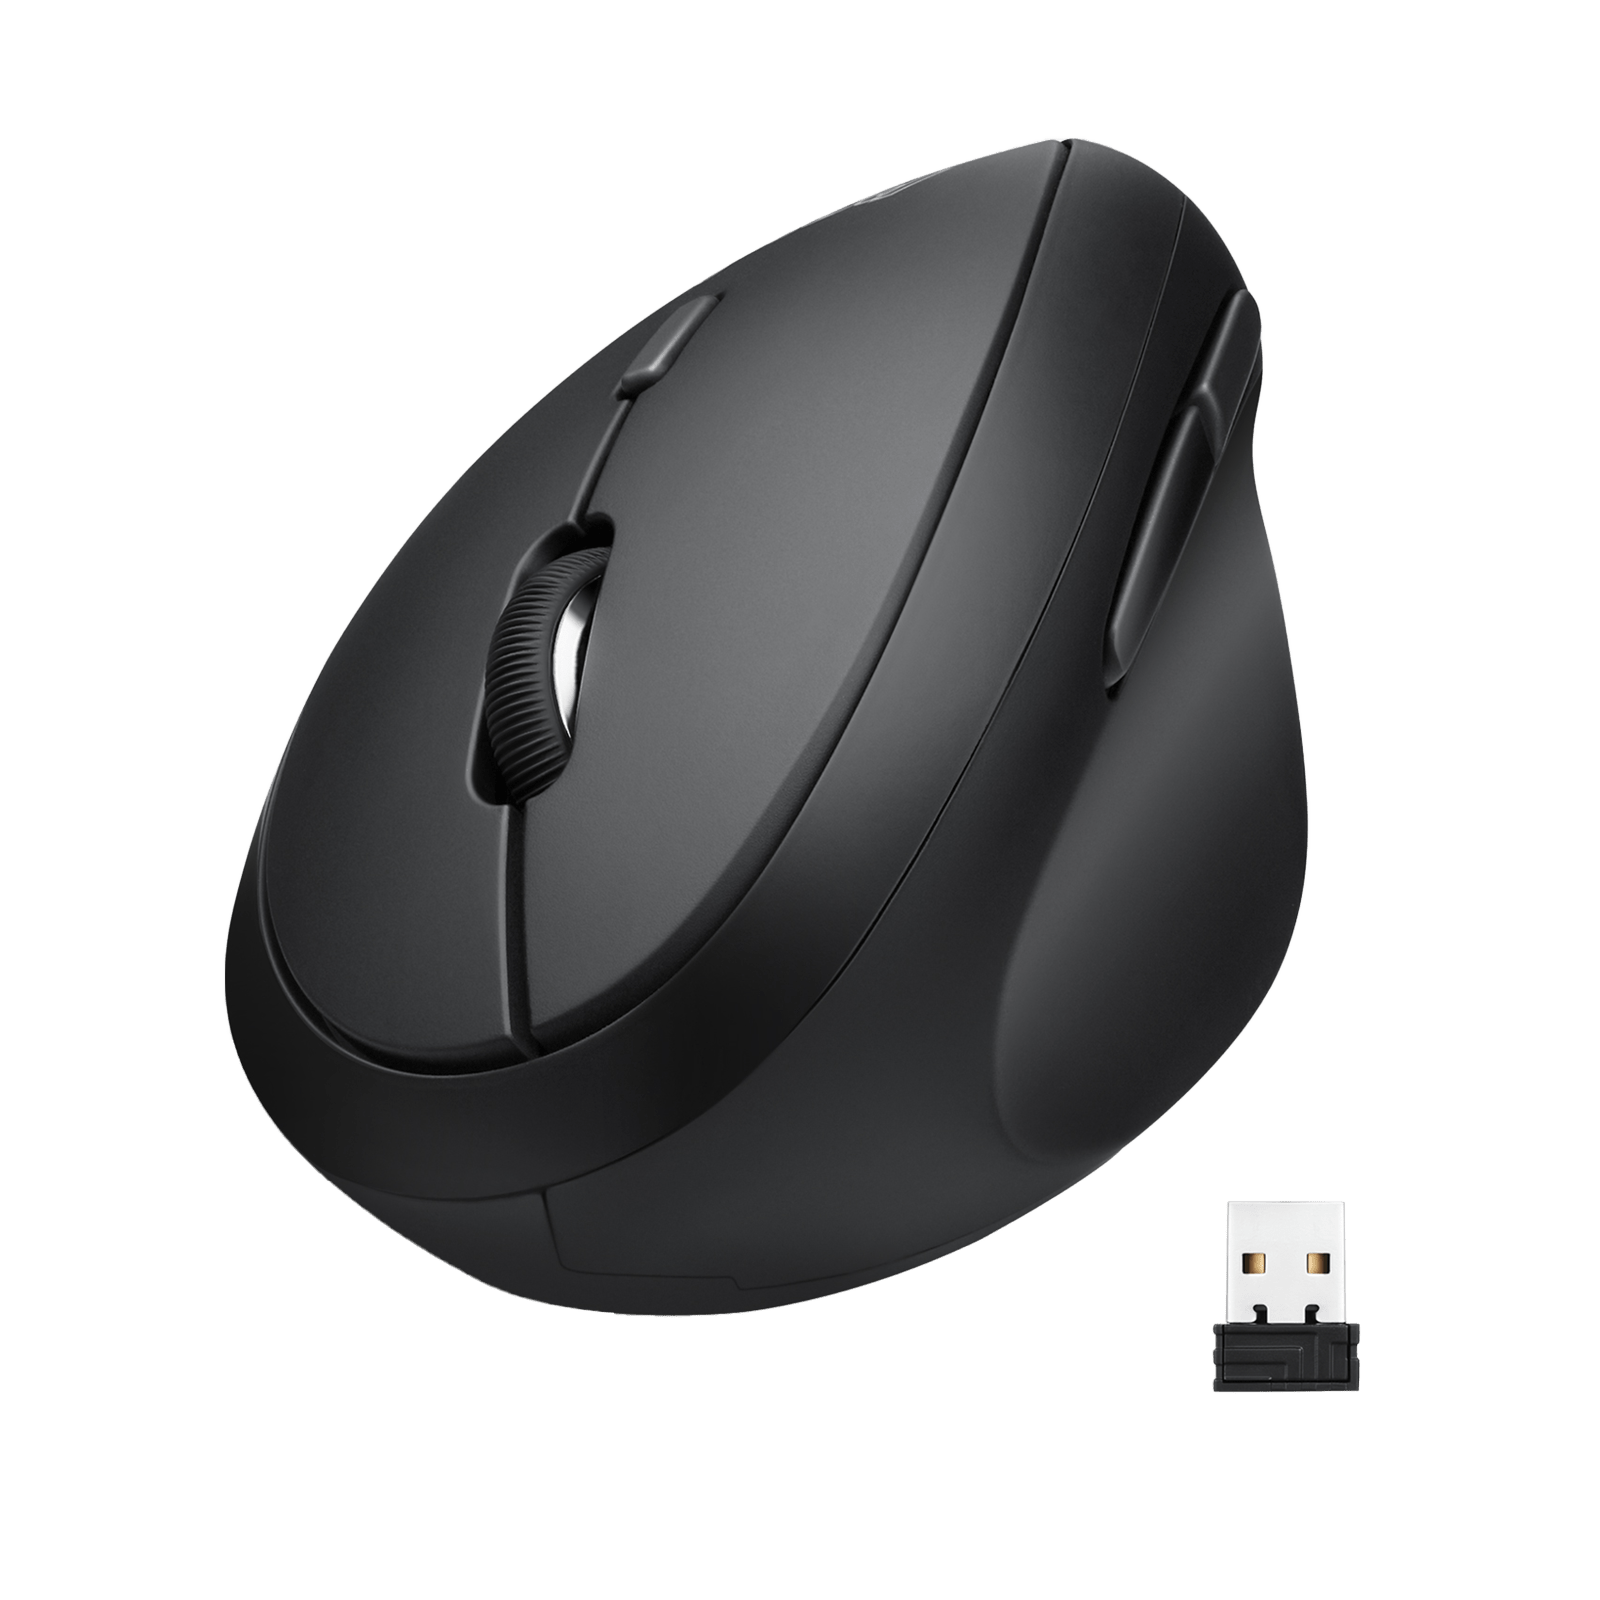 PERIMICE-619 - Wireless Ergonomic Vertical Mouse with Silent Click and Small Design- Multi-Device - Perixx Europe